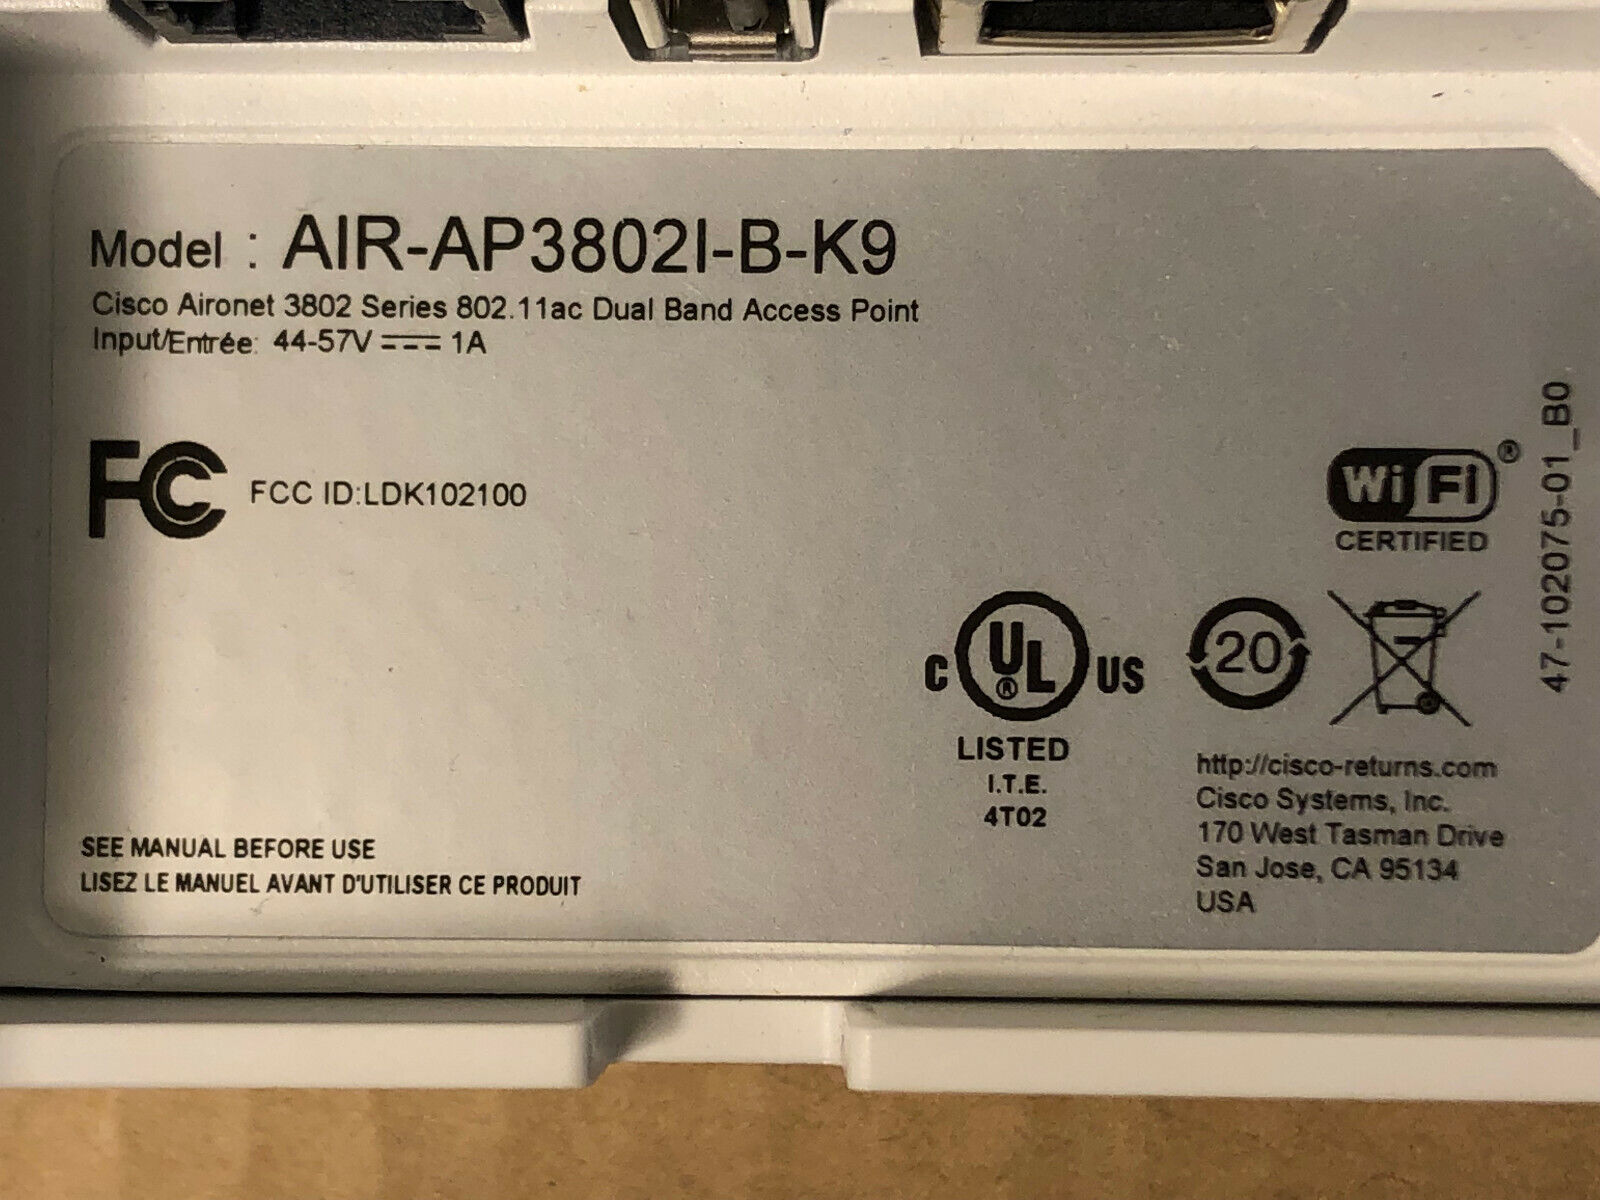 Cisco Air-AP3802i-B-K9 Wireless Access Point port